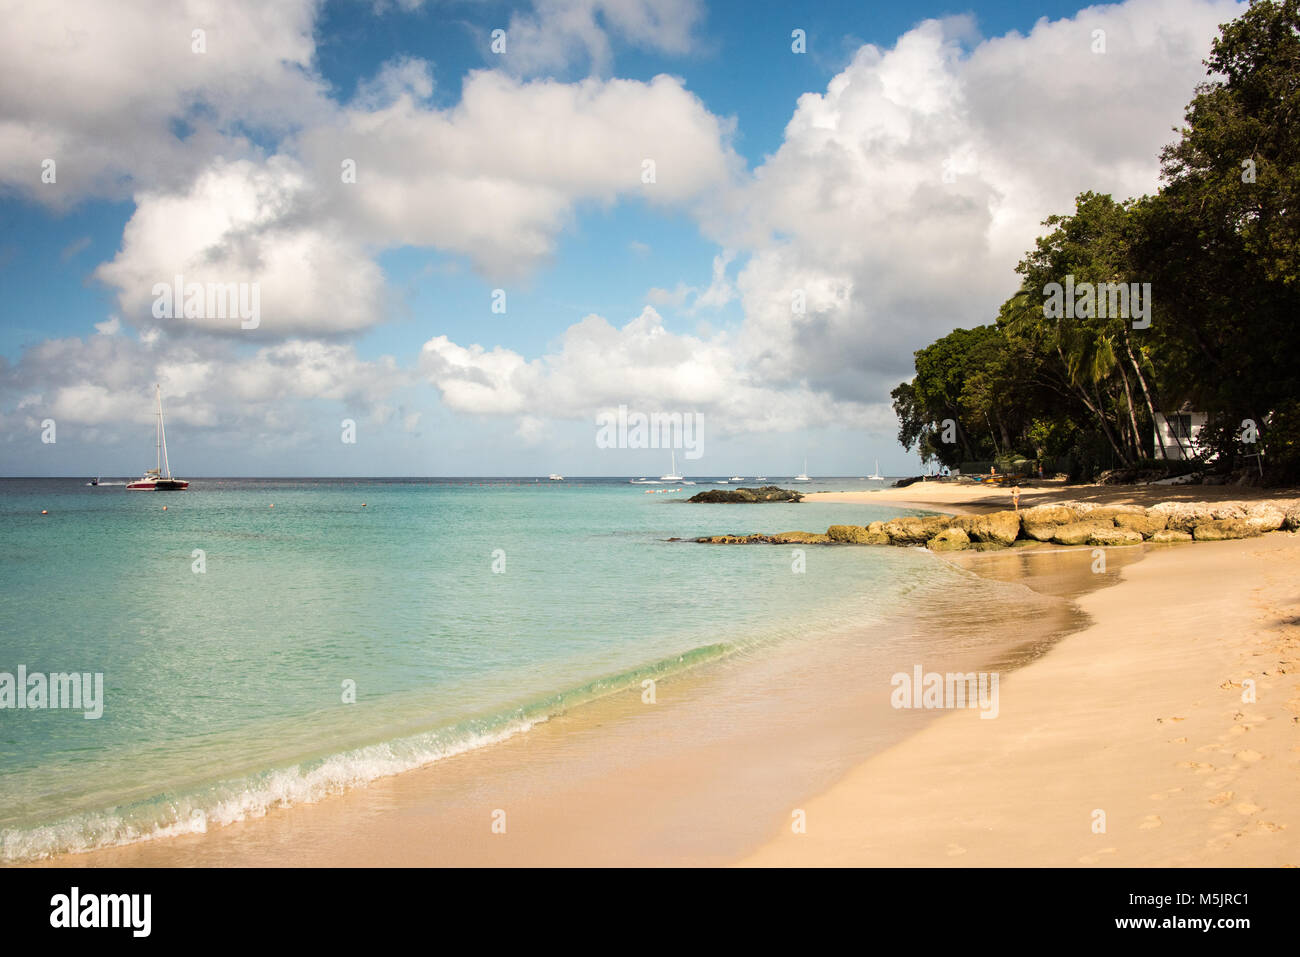 Plage de sable fin, Barbados, Caribbean Banque D'Images